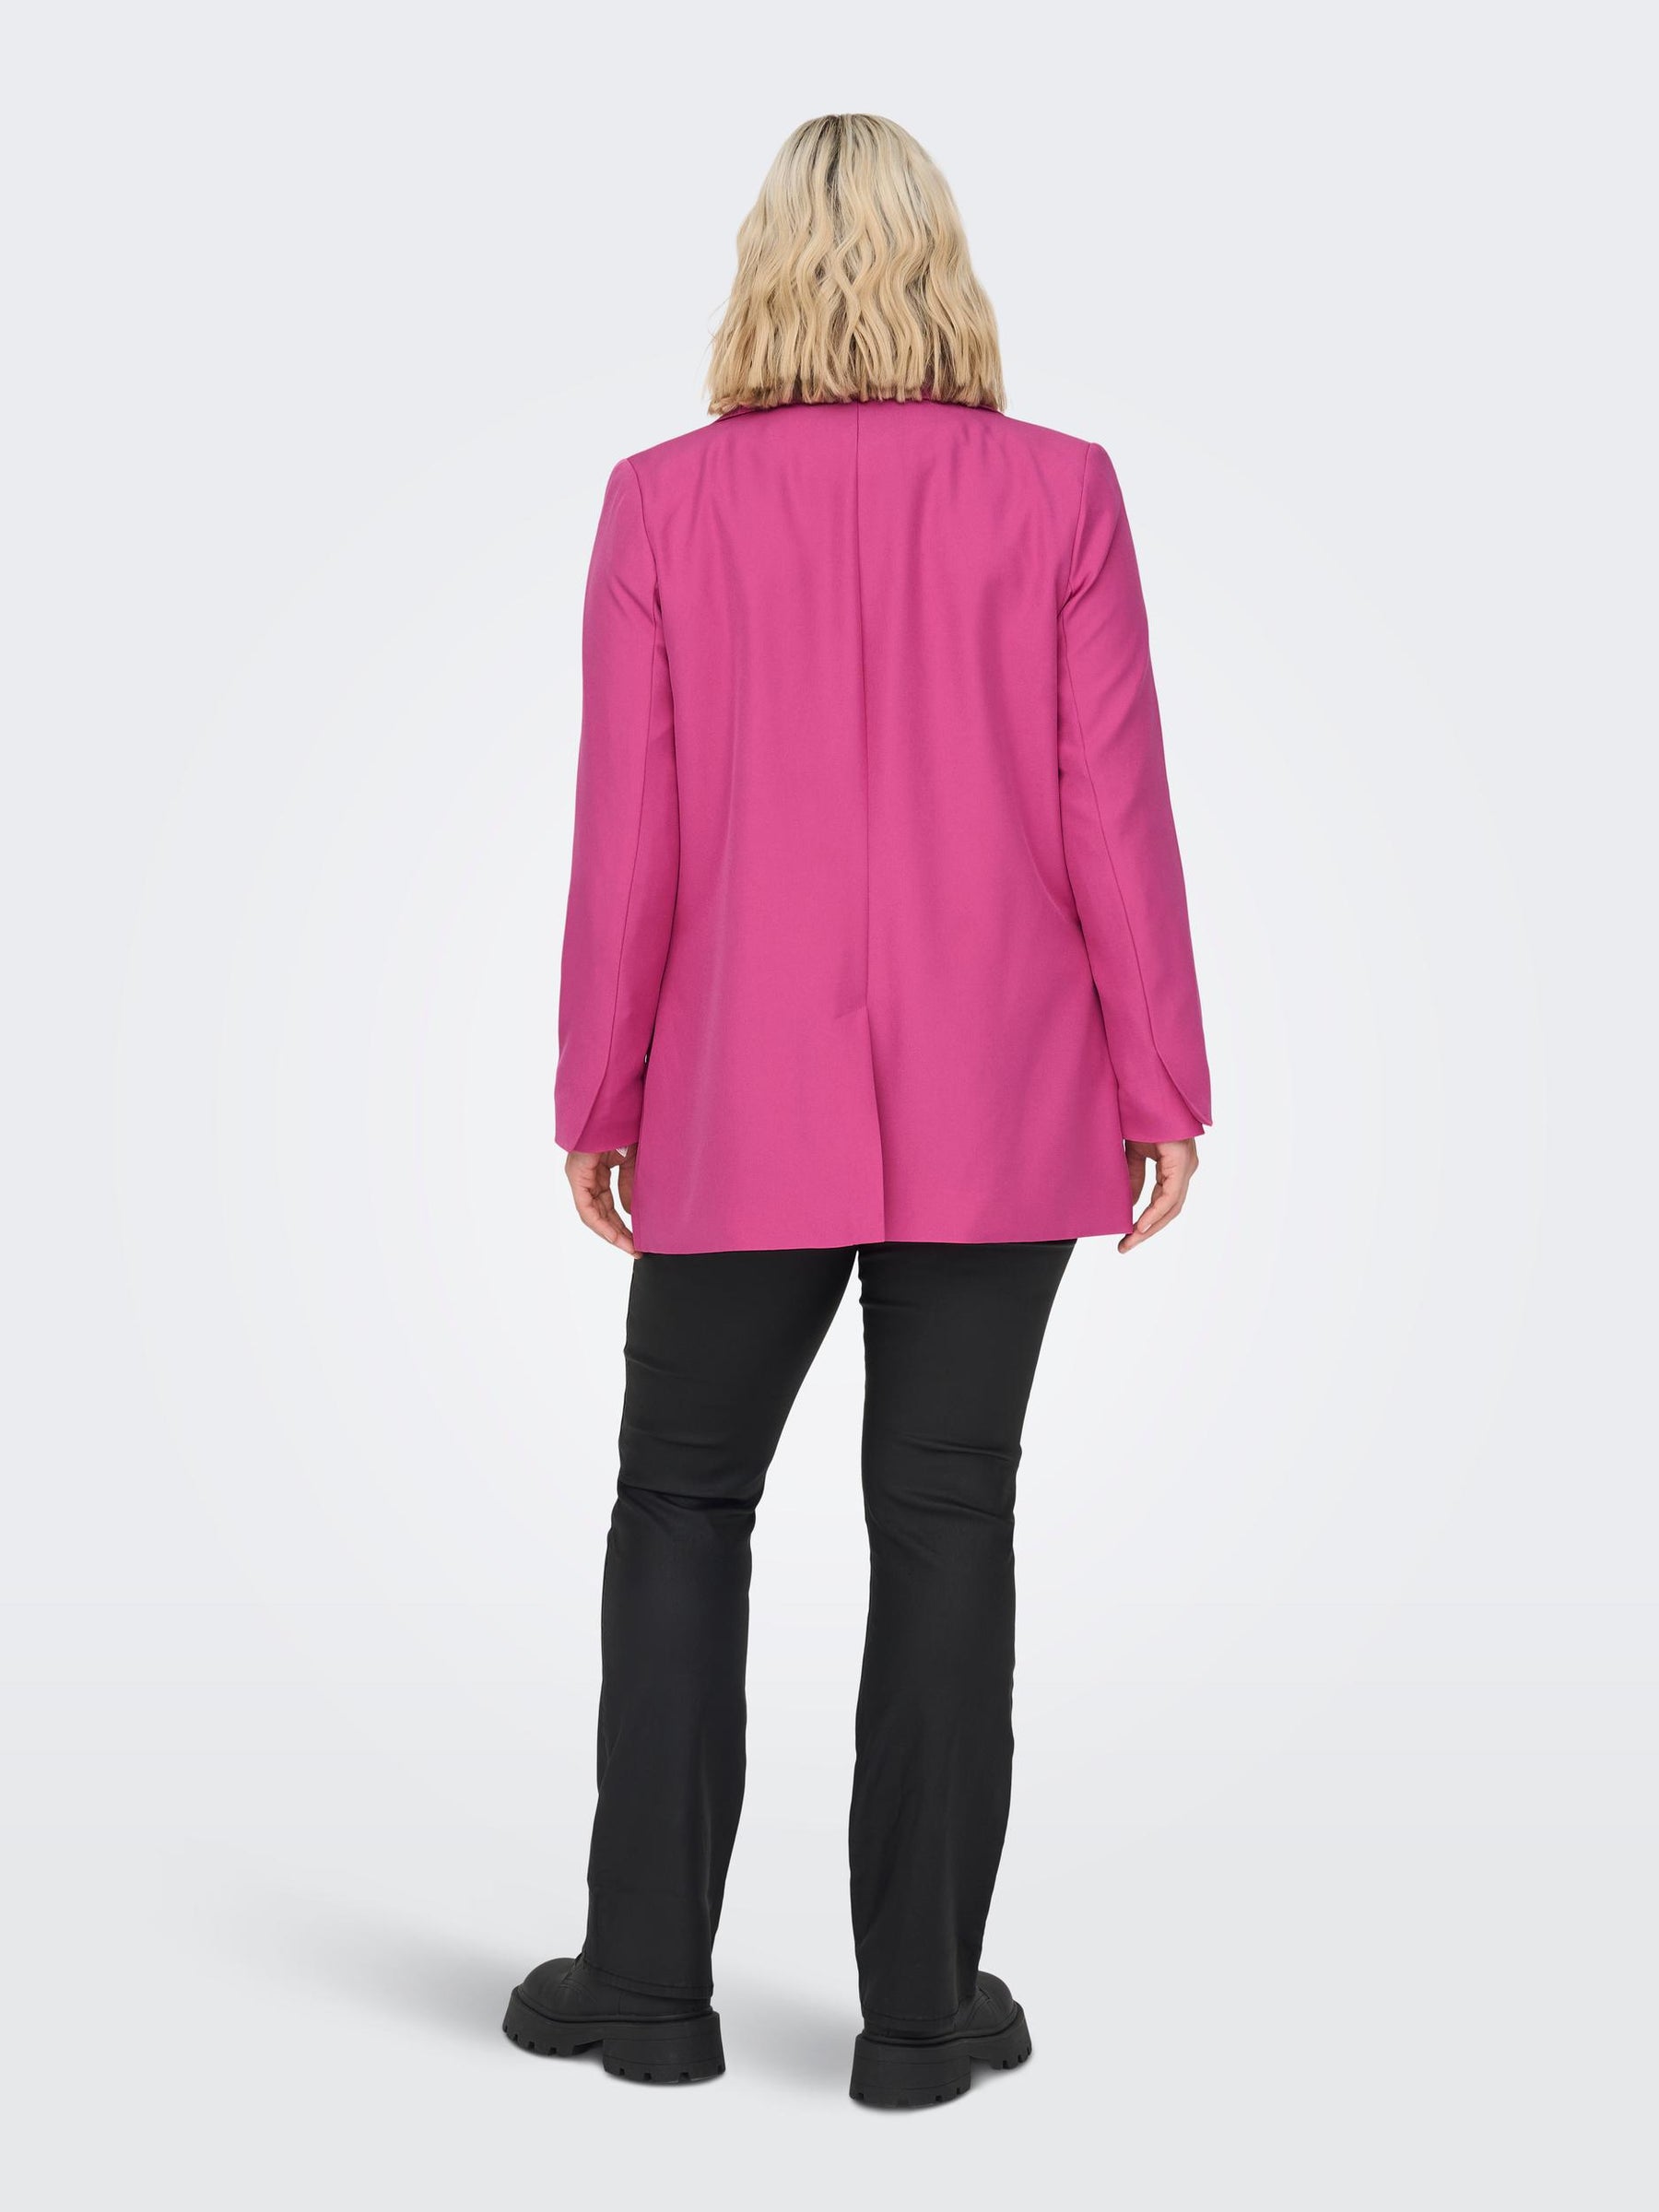 Only Carmakoma Blazer in Pink - Wardrobe Plus